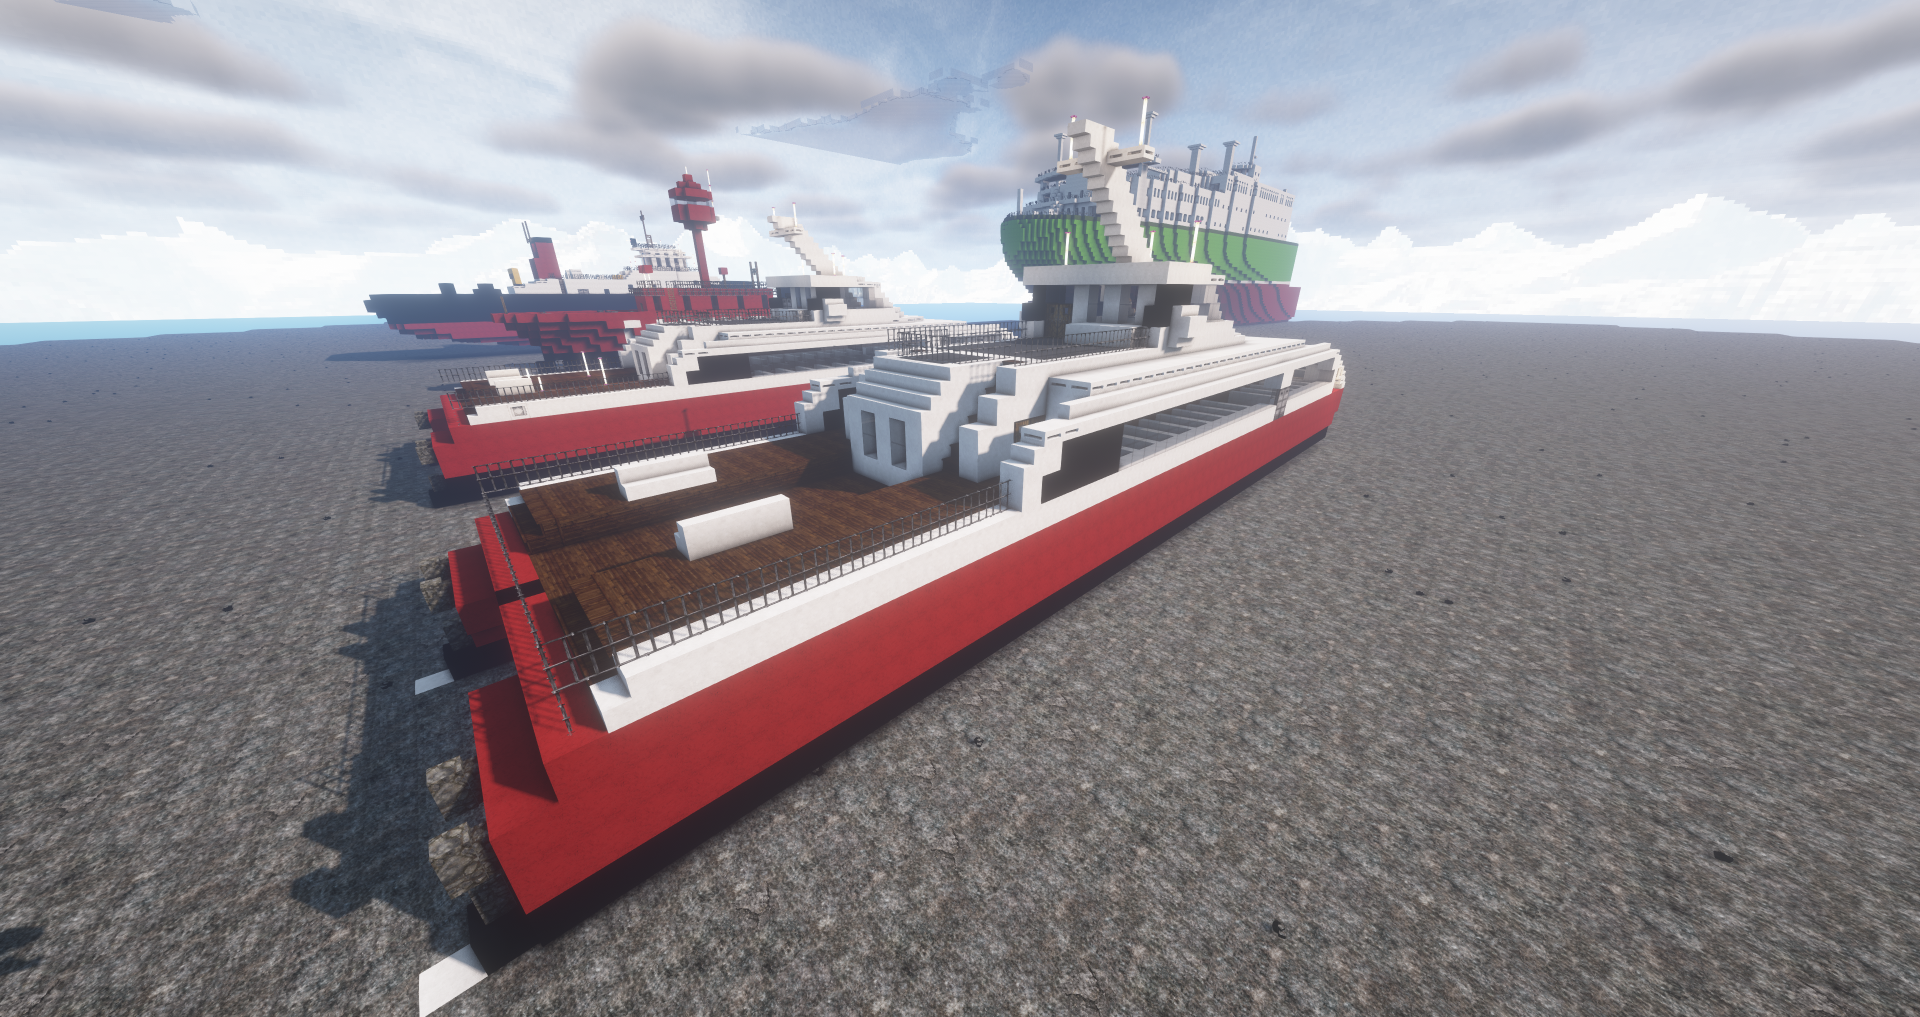 MV Redjet 3 Minecraft ship build